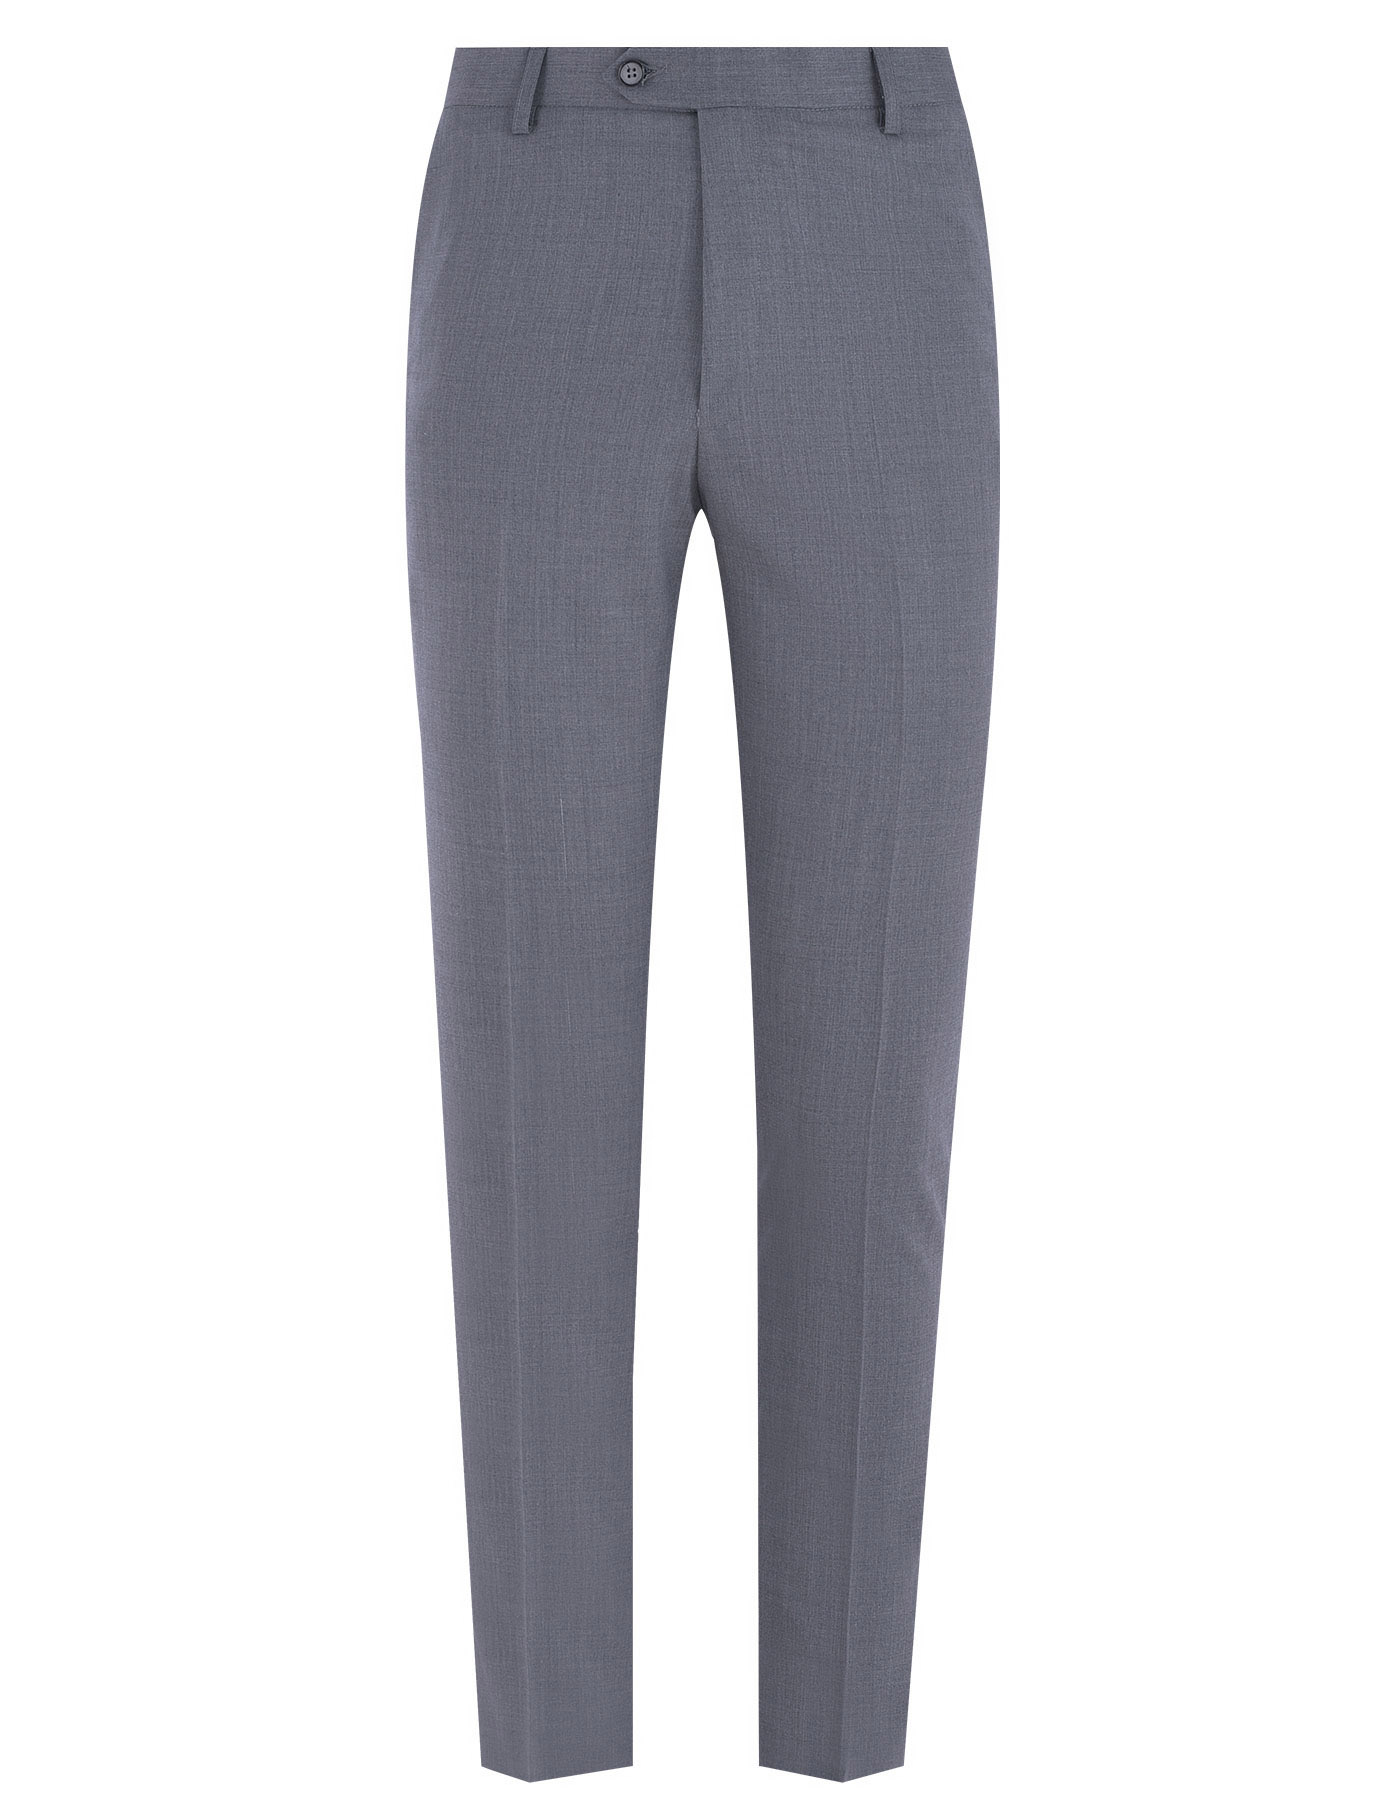 Buy Grey Formal Trouser For Men Online Shopping in Pakistan  Uniworth